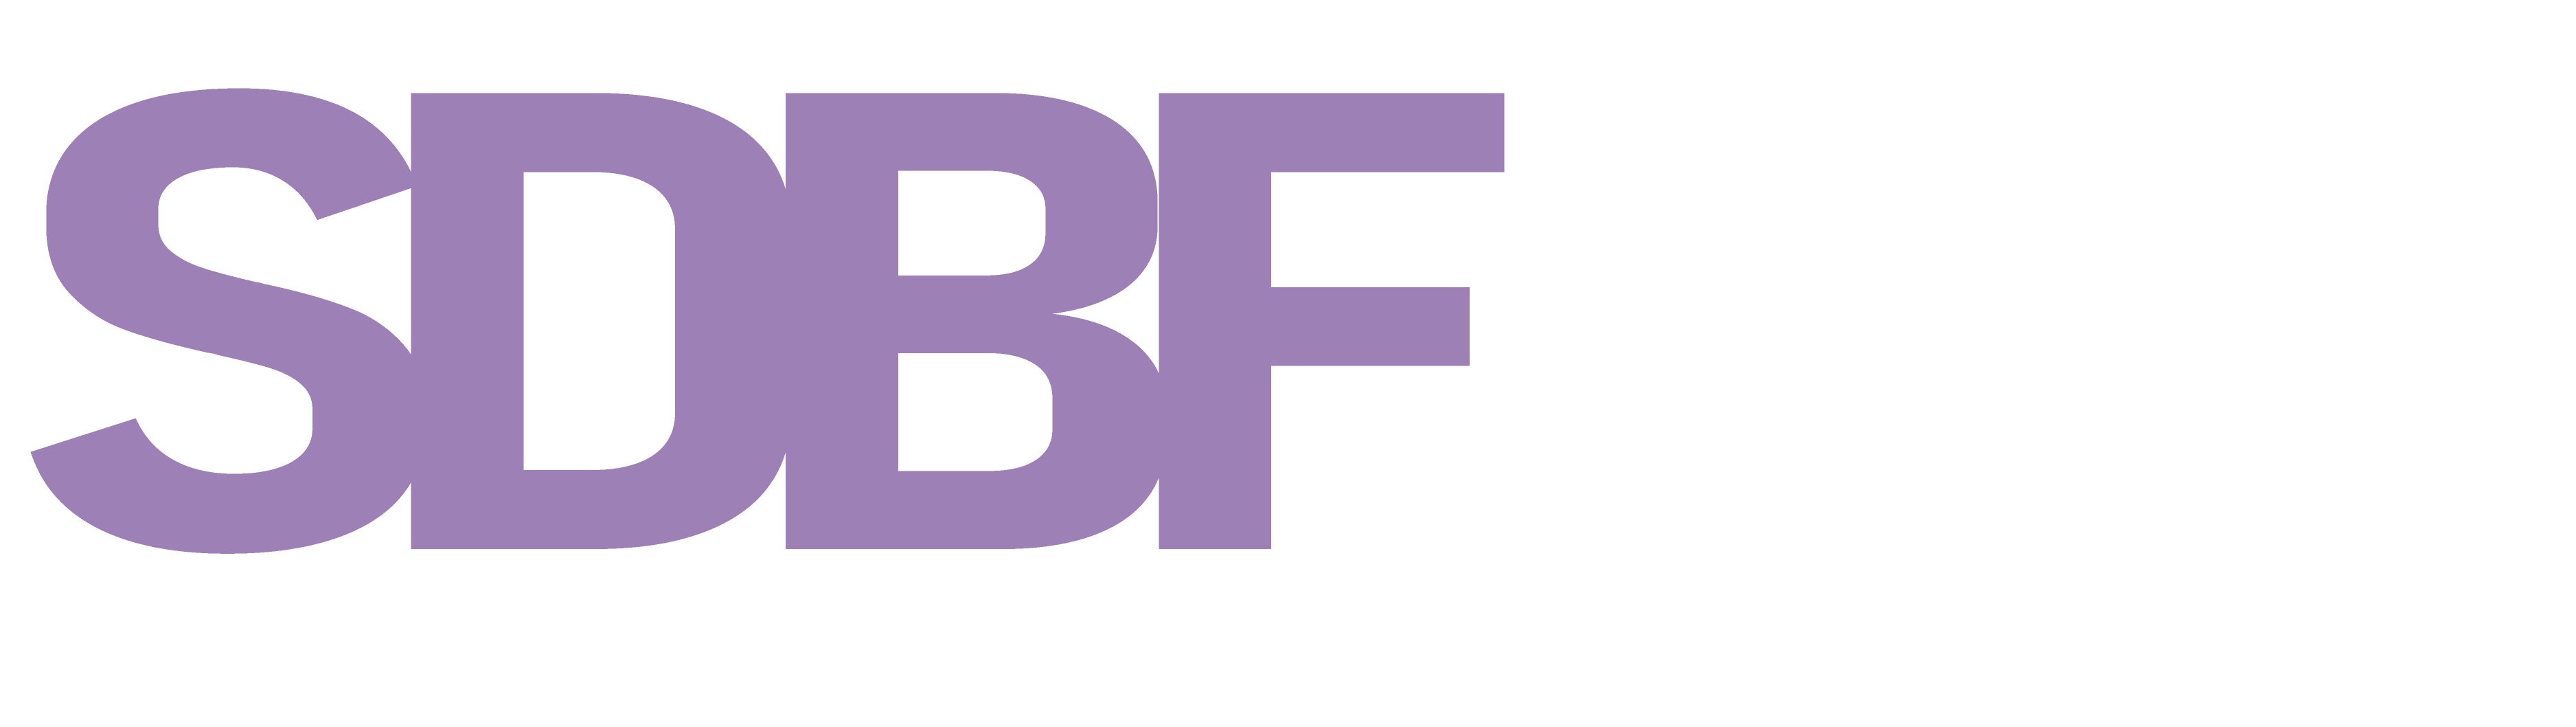 SDBF Building Consultancy LTD